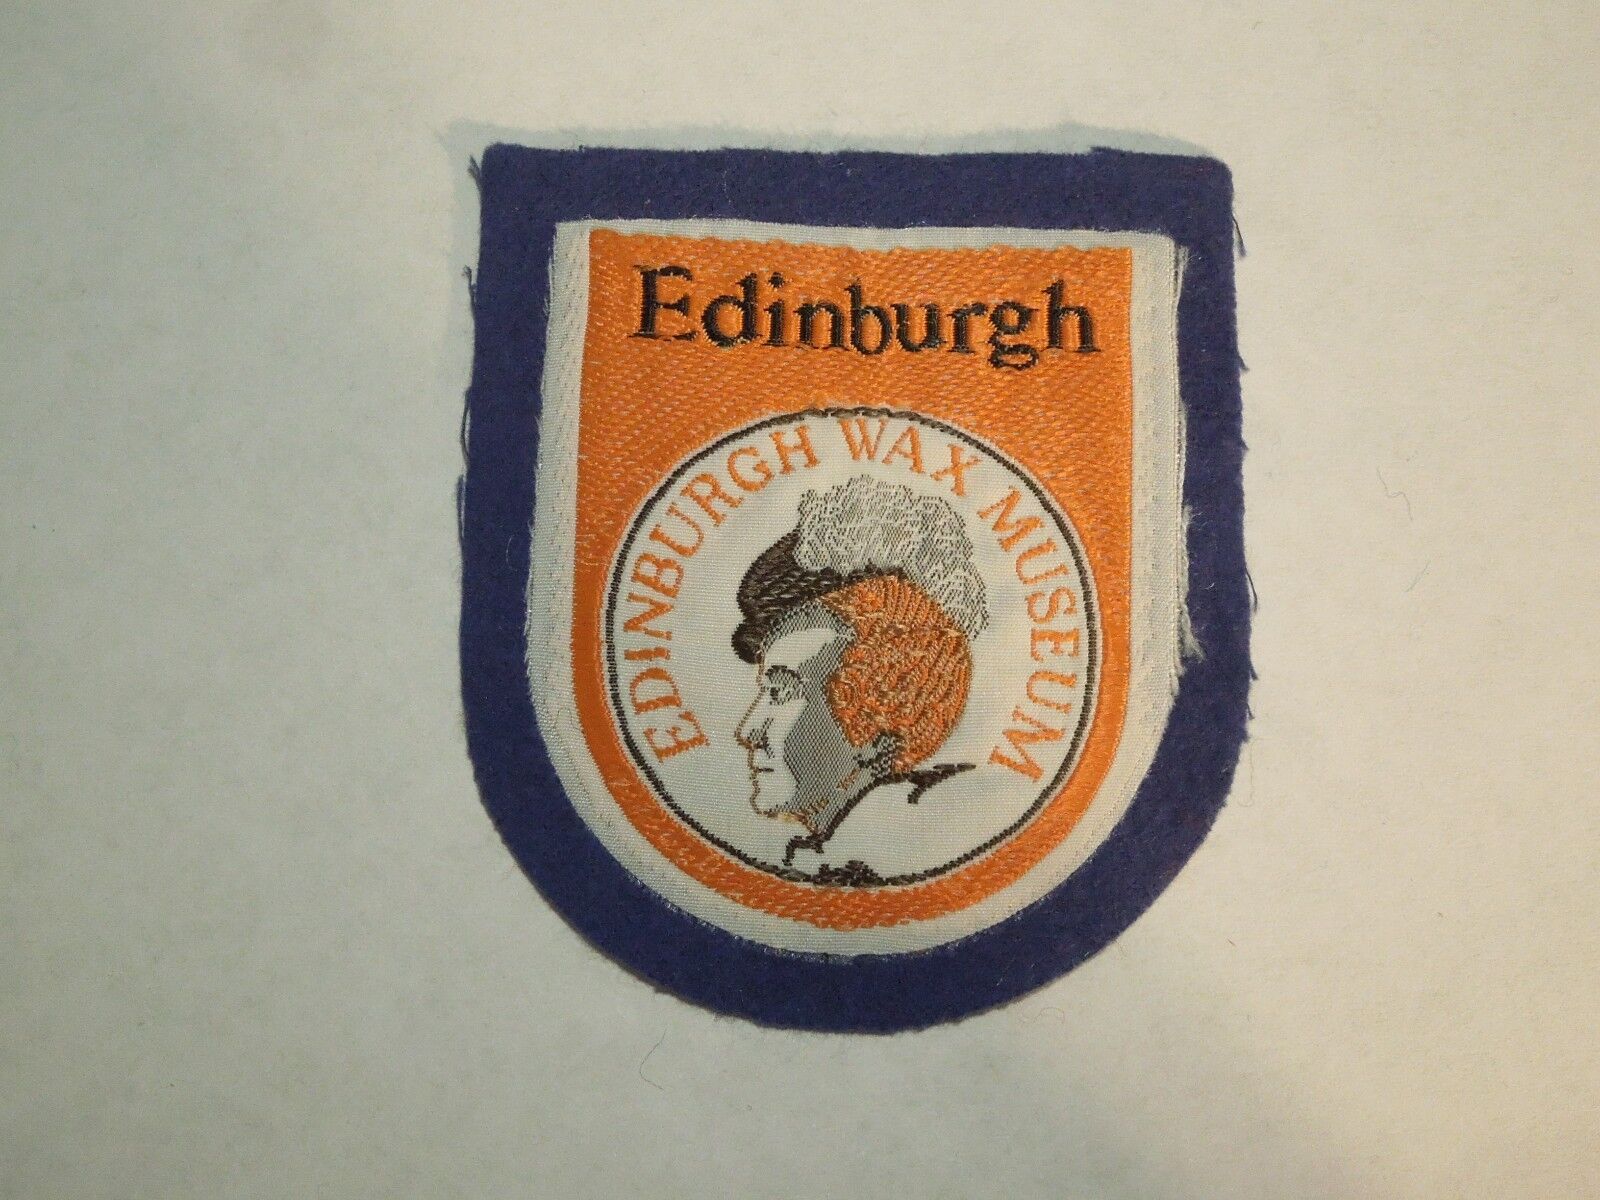 Vintage Edinburgh Wax Museum Felt Sewn Patch -Mary Queen of Scots Profile